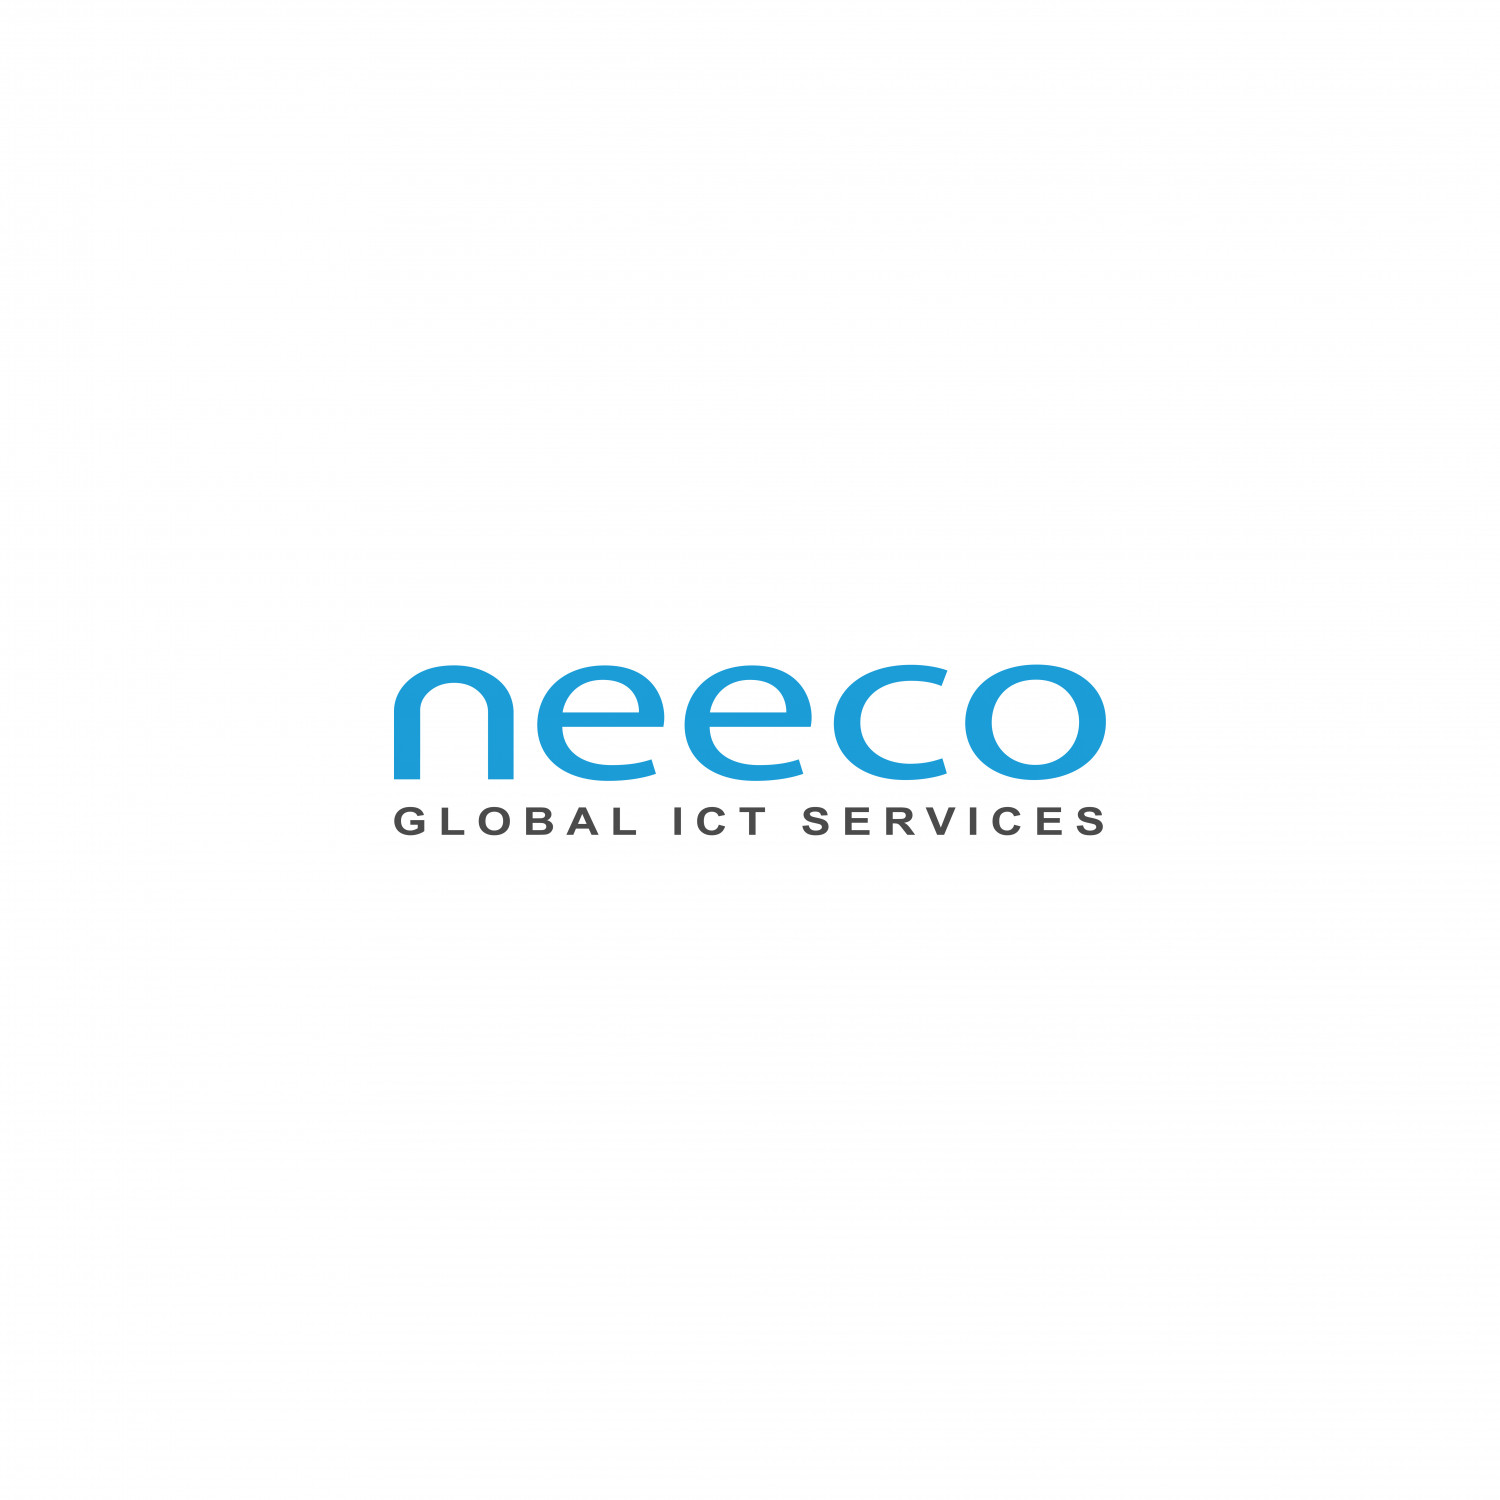 Neeco Global ICT Services